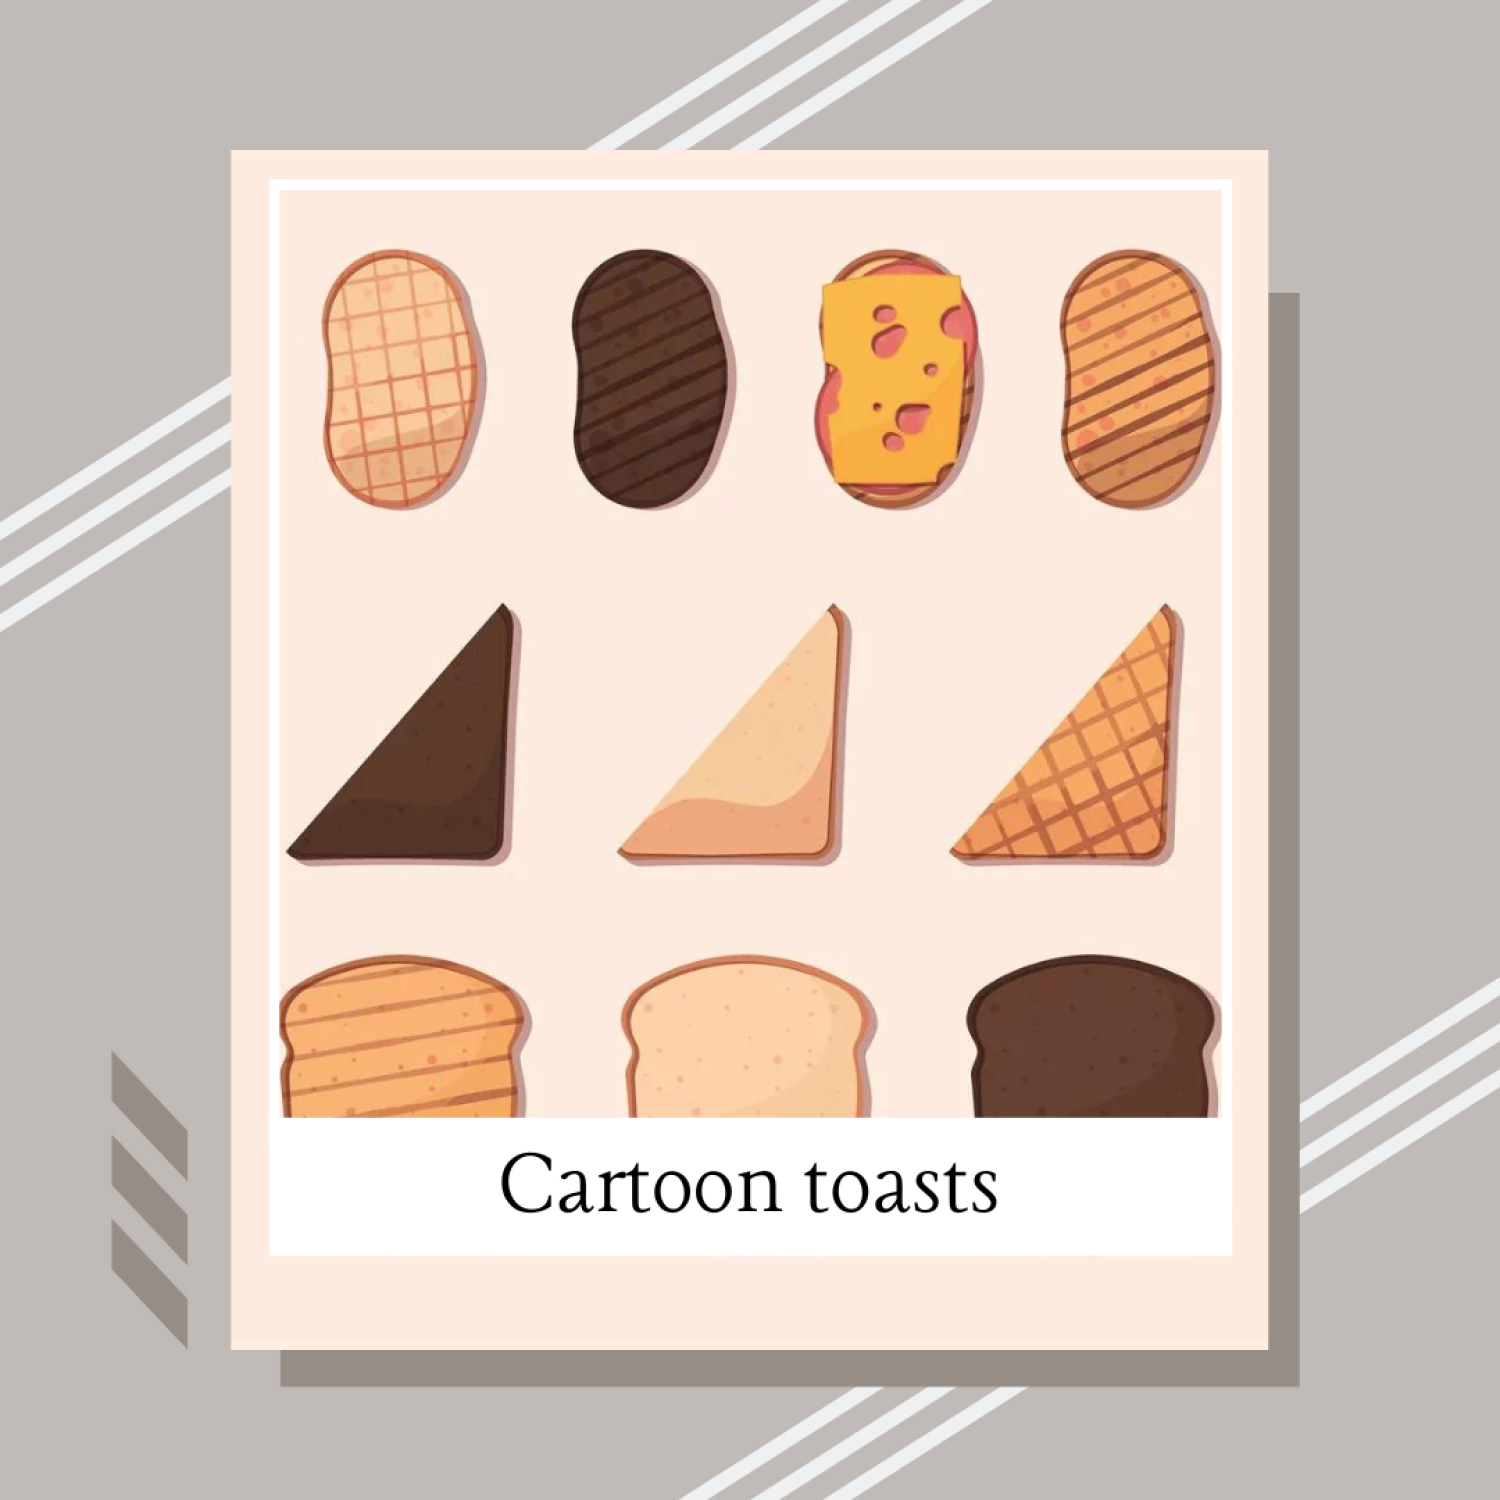 Prints of cartoon toasts.